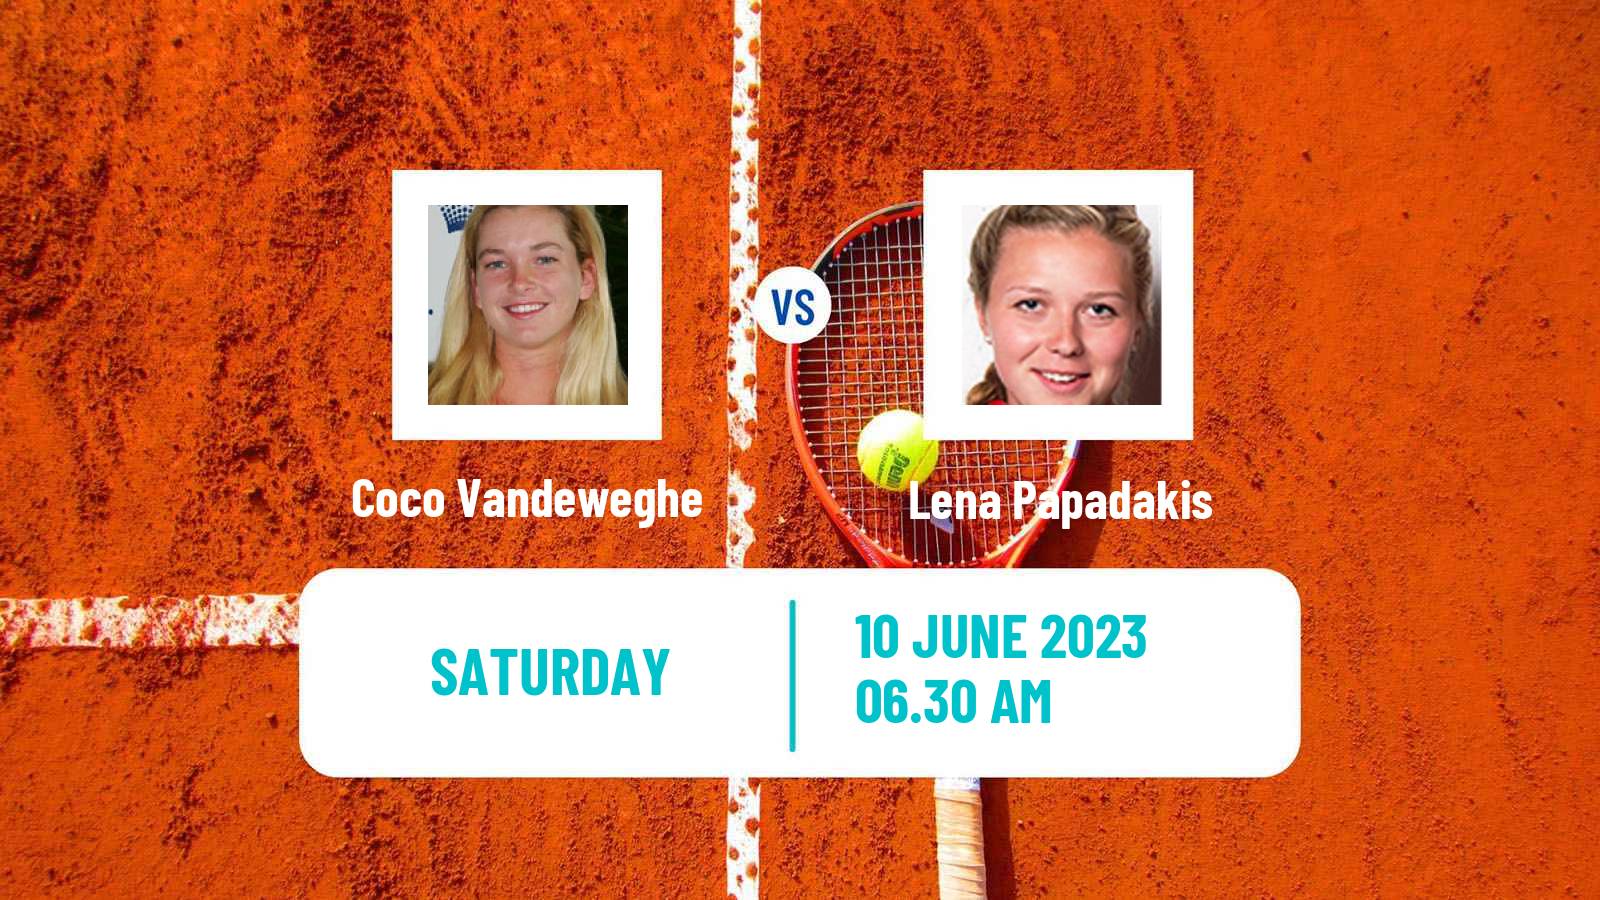 Tennis WTA Hertogenbosch Coco Vandeweghe - Lena Papadakis